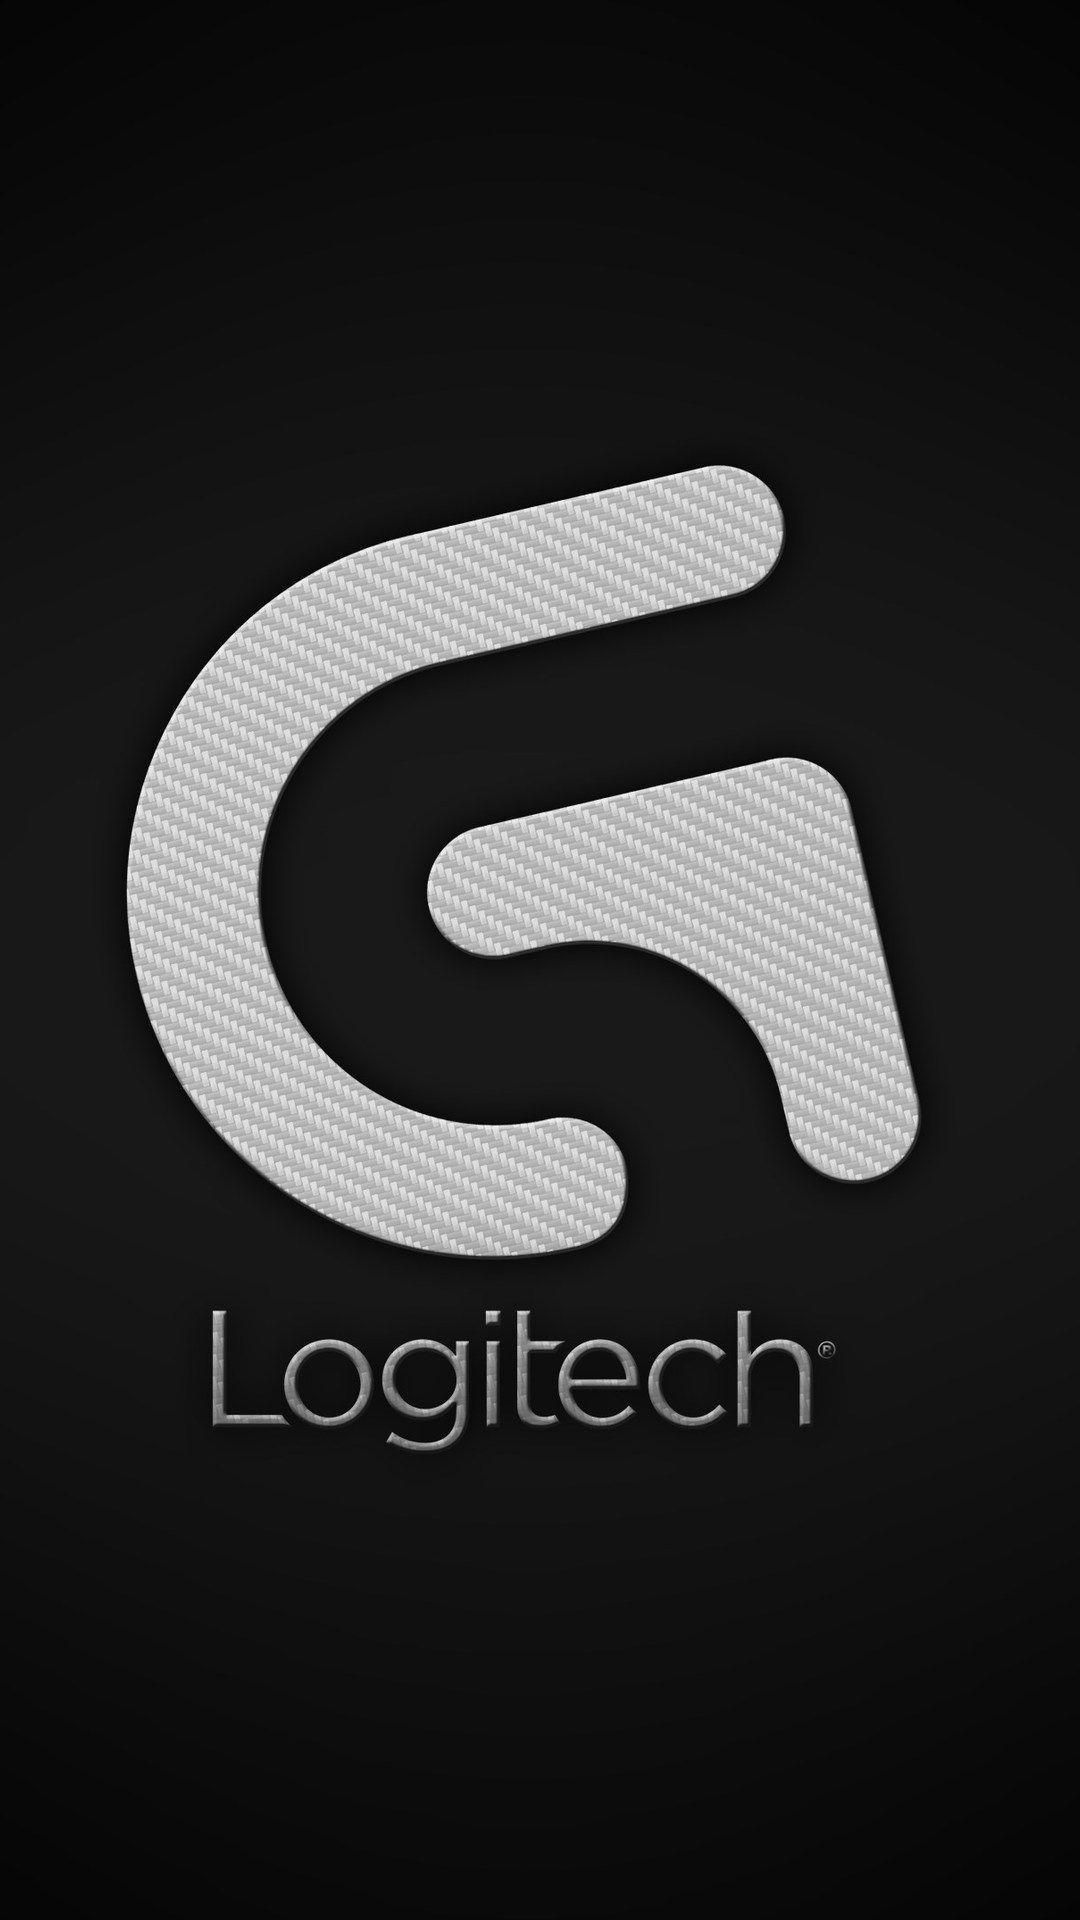 Download Logitech Brand Logo HD Wallpaper In 1080x1920 Screen